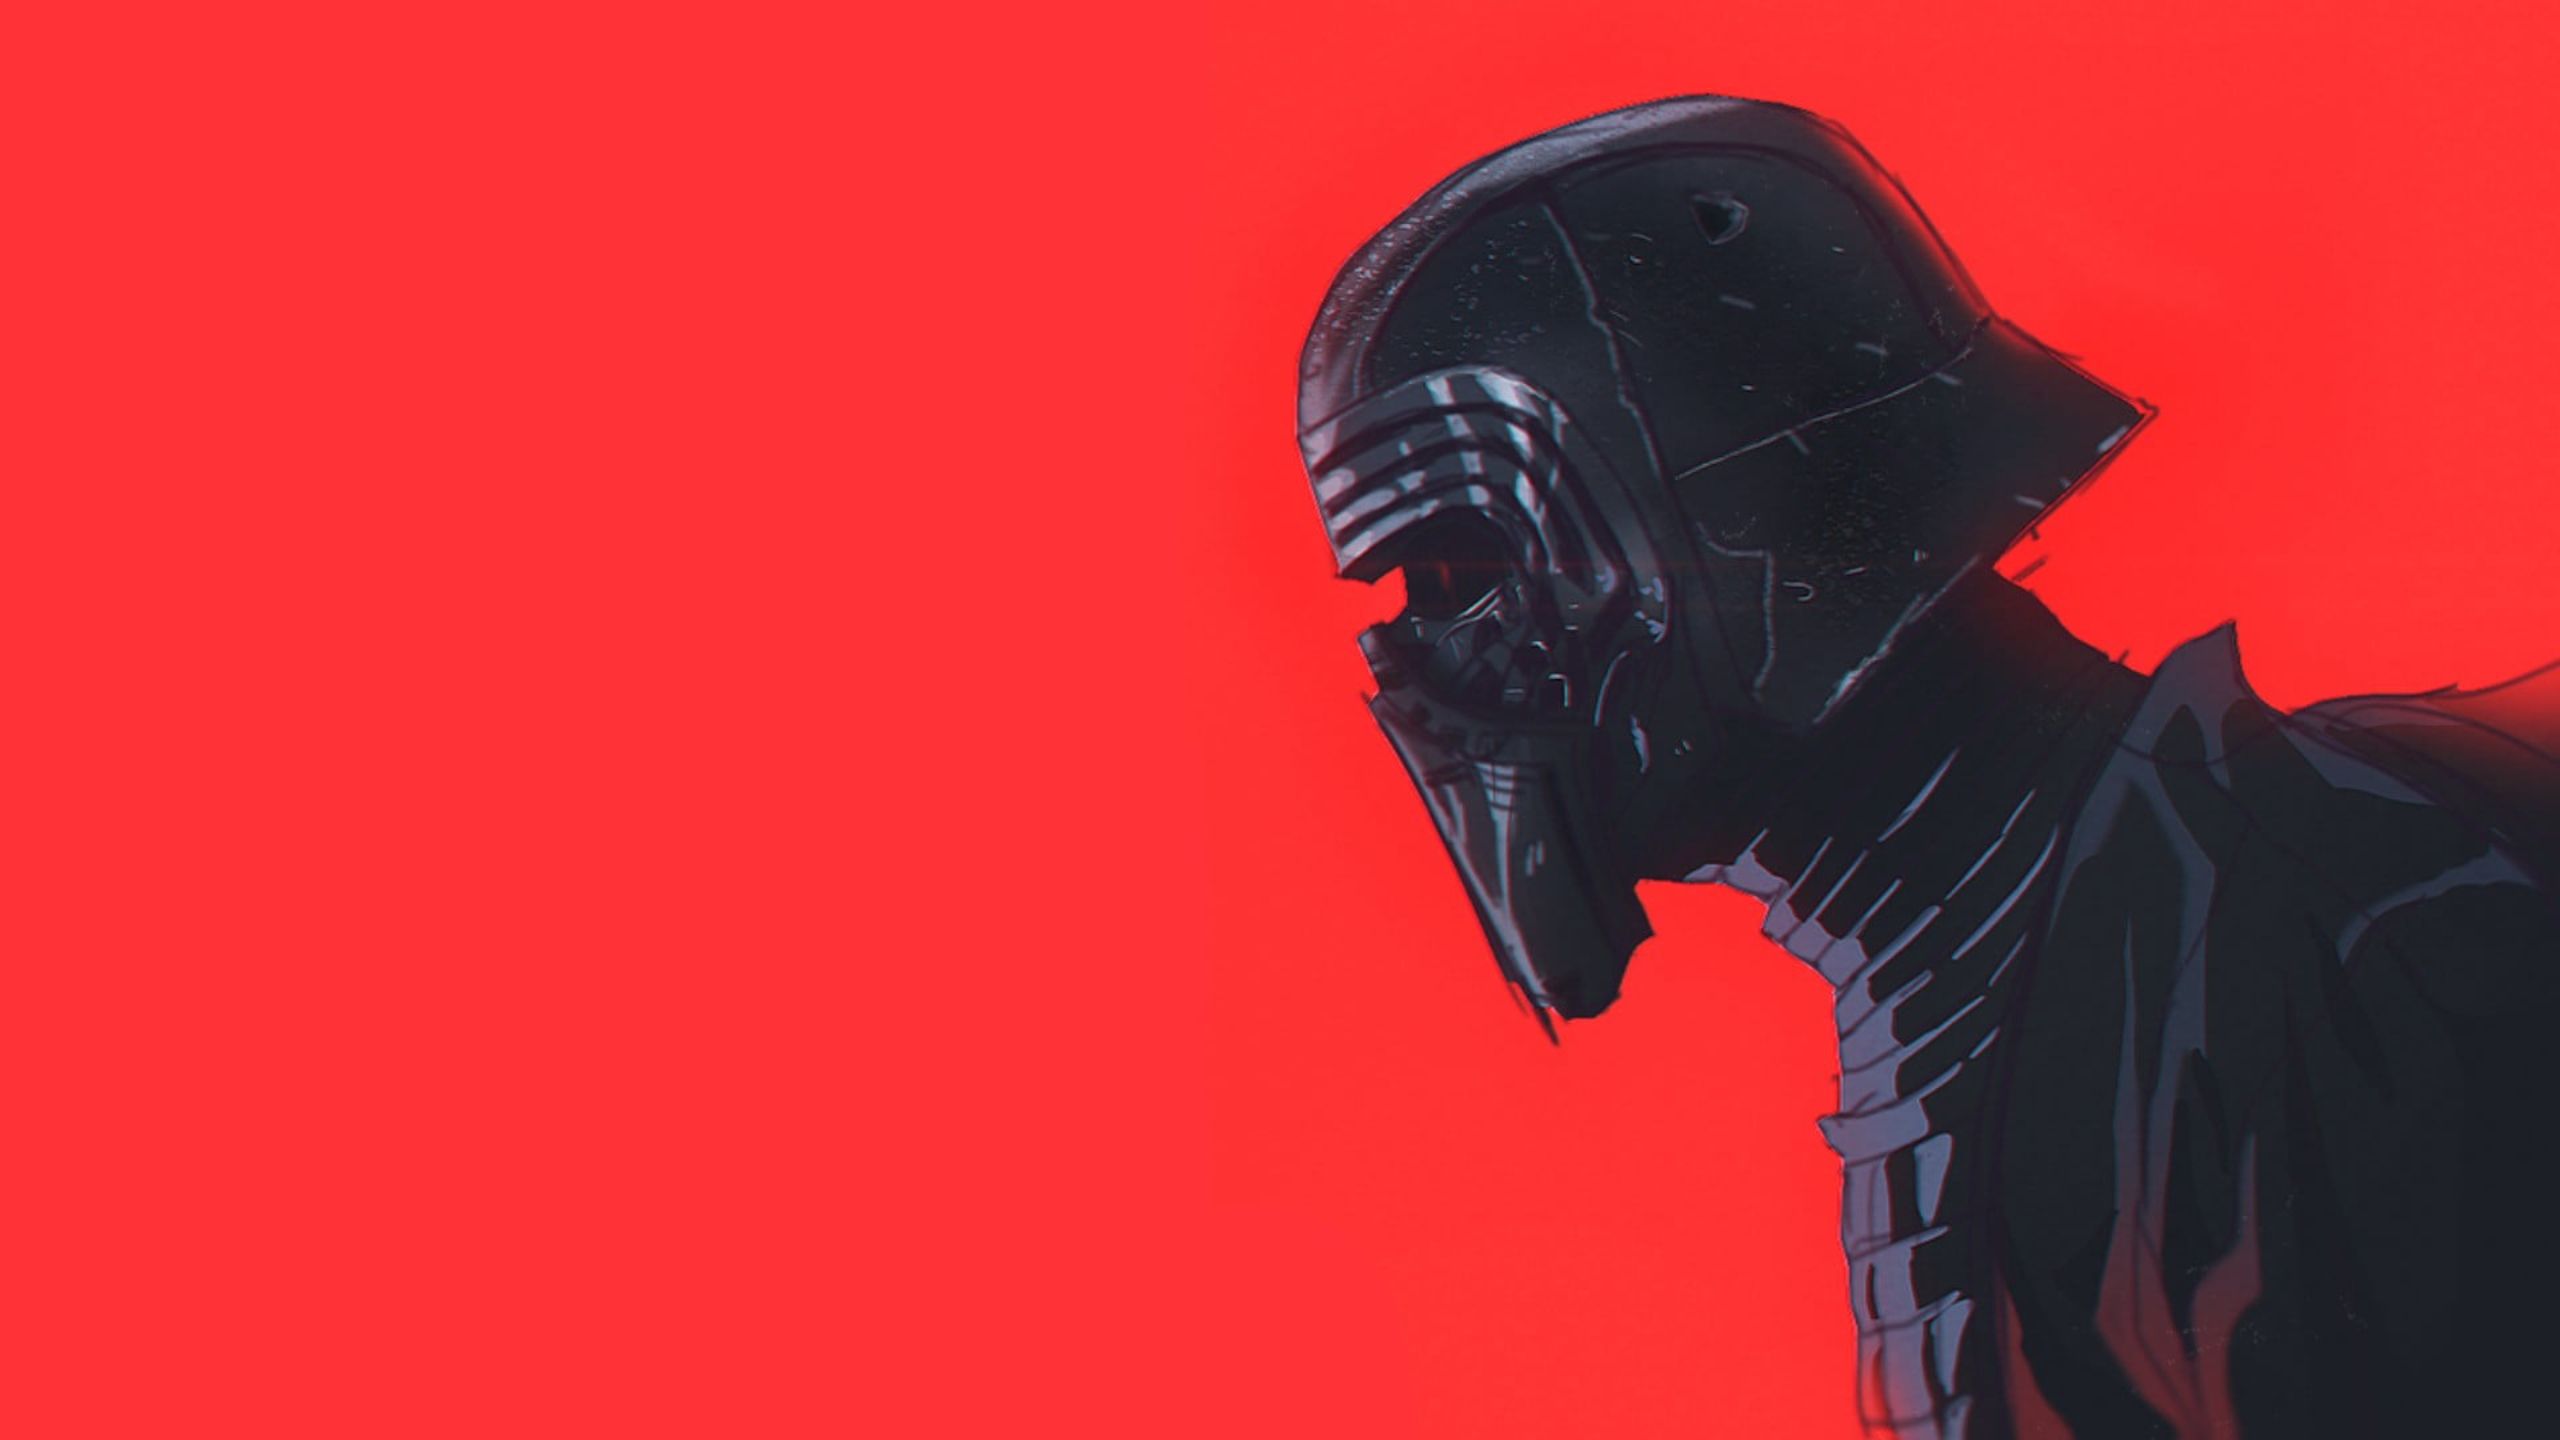 2560x1440px. free download. HD wallpaper: Dart Vader illustration, Kylo Ren, Star Wars, mask, red. Kylo ren wallpaper, Star wars background, Star wars wallpaper